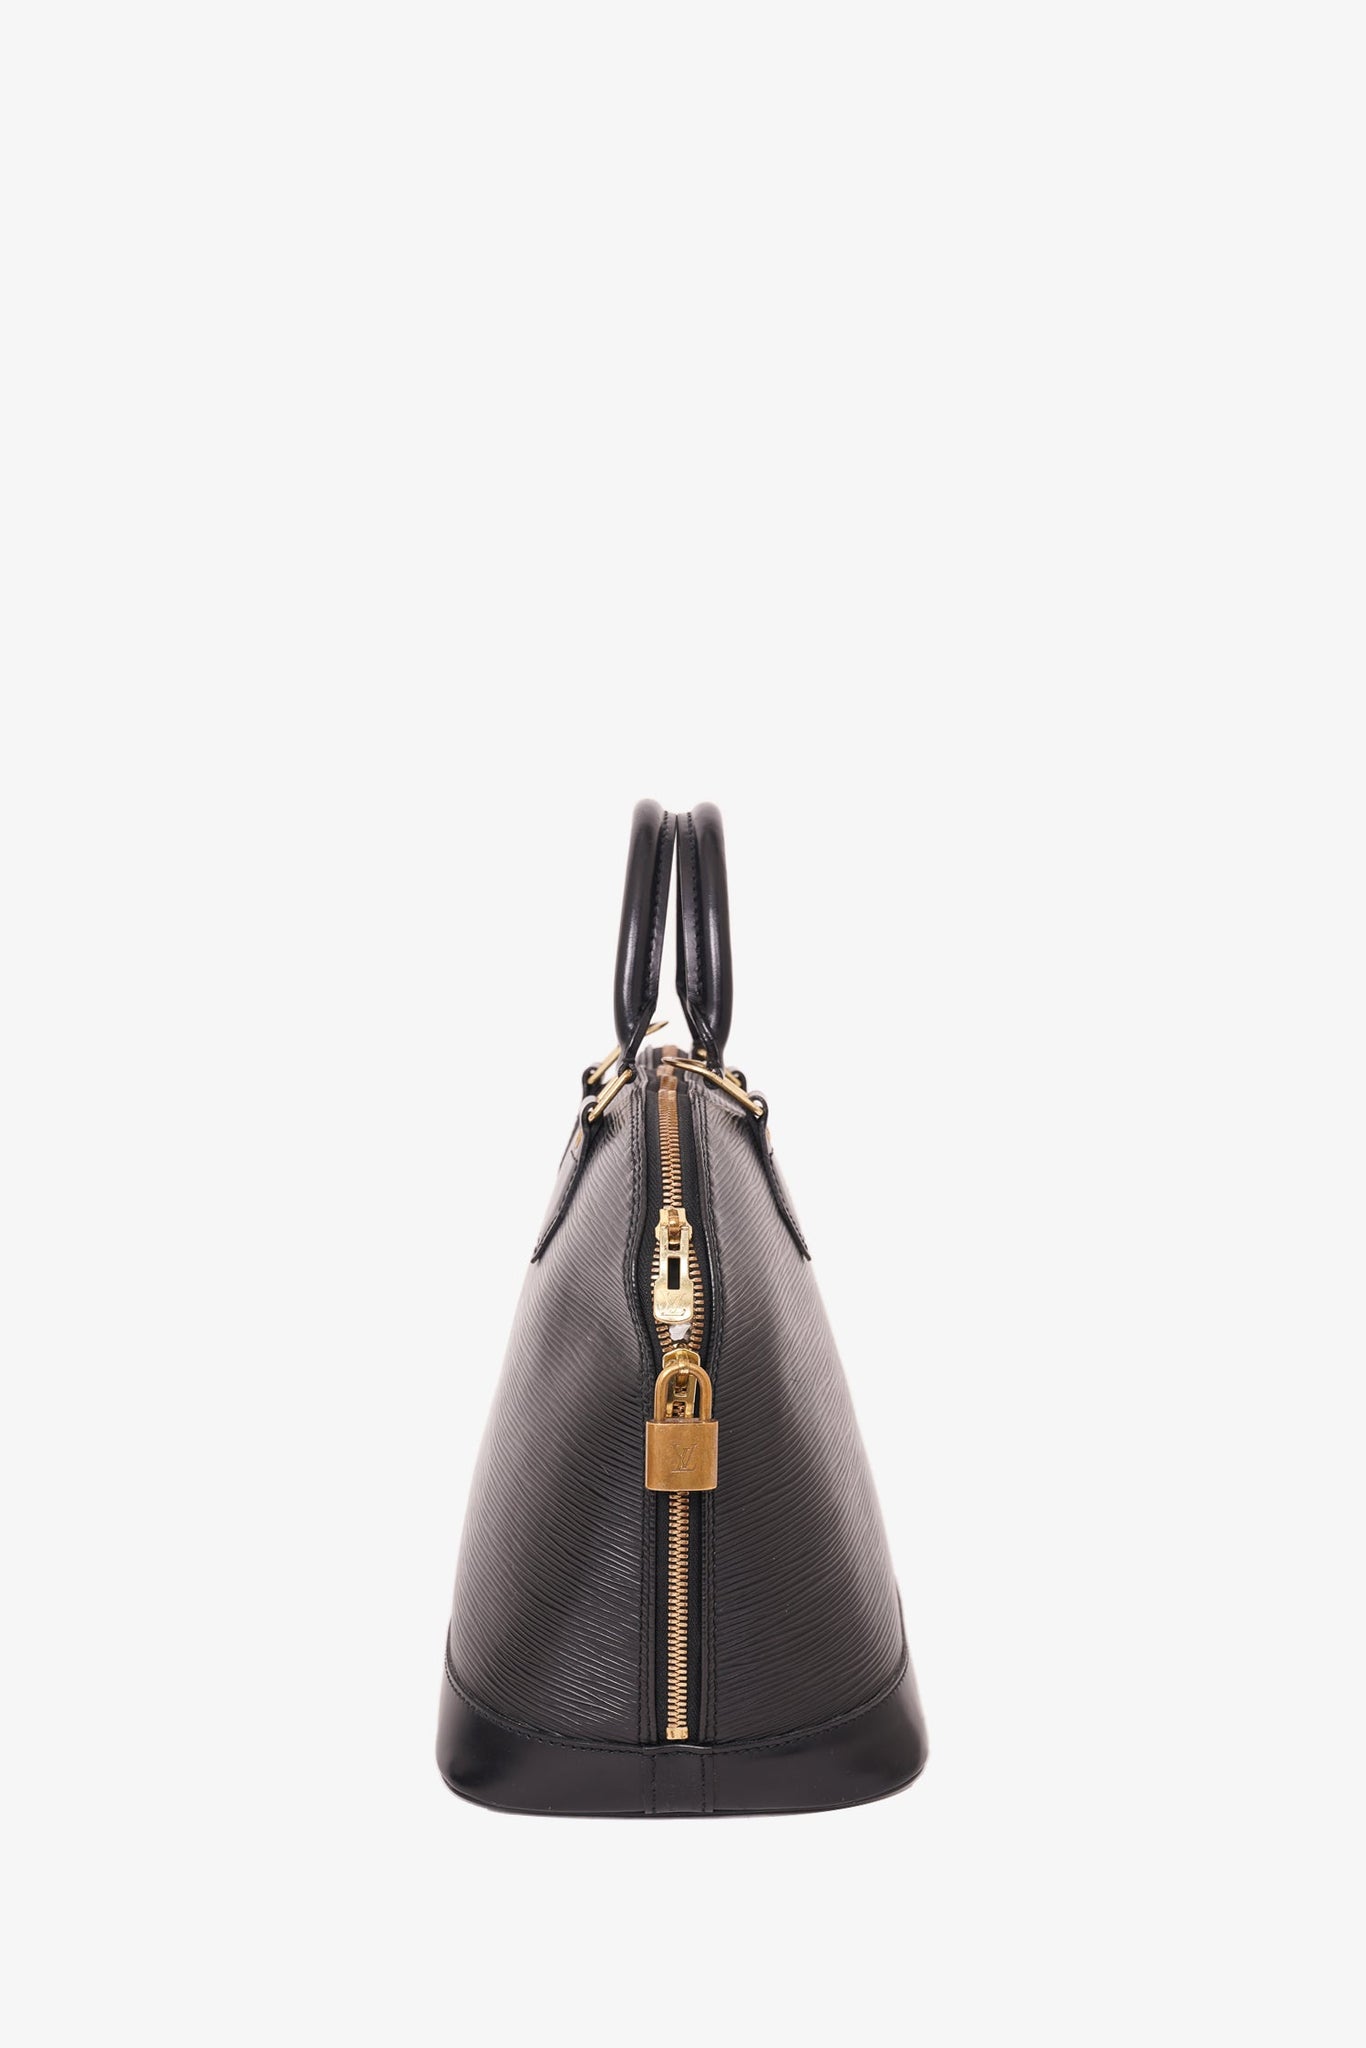 Louis Vuitton Black Epi PM "Alma" Top Handle